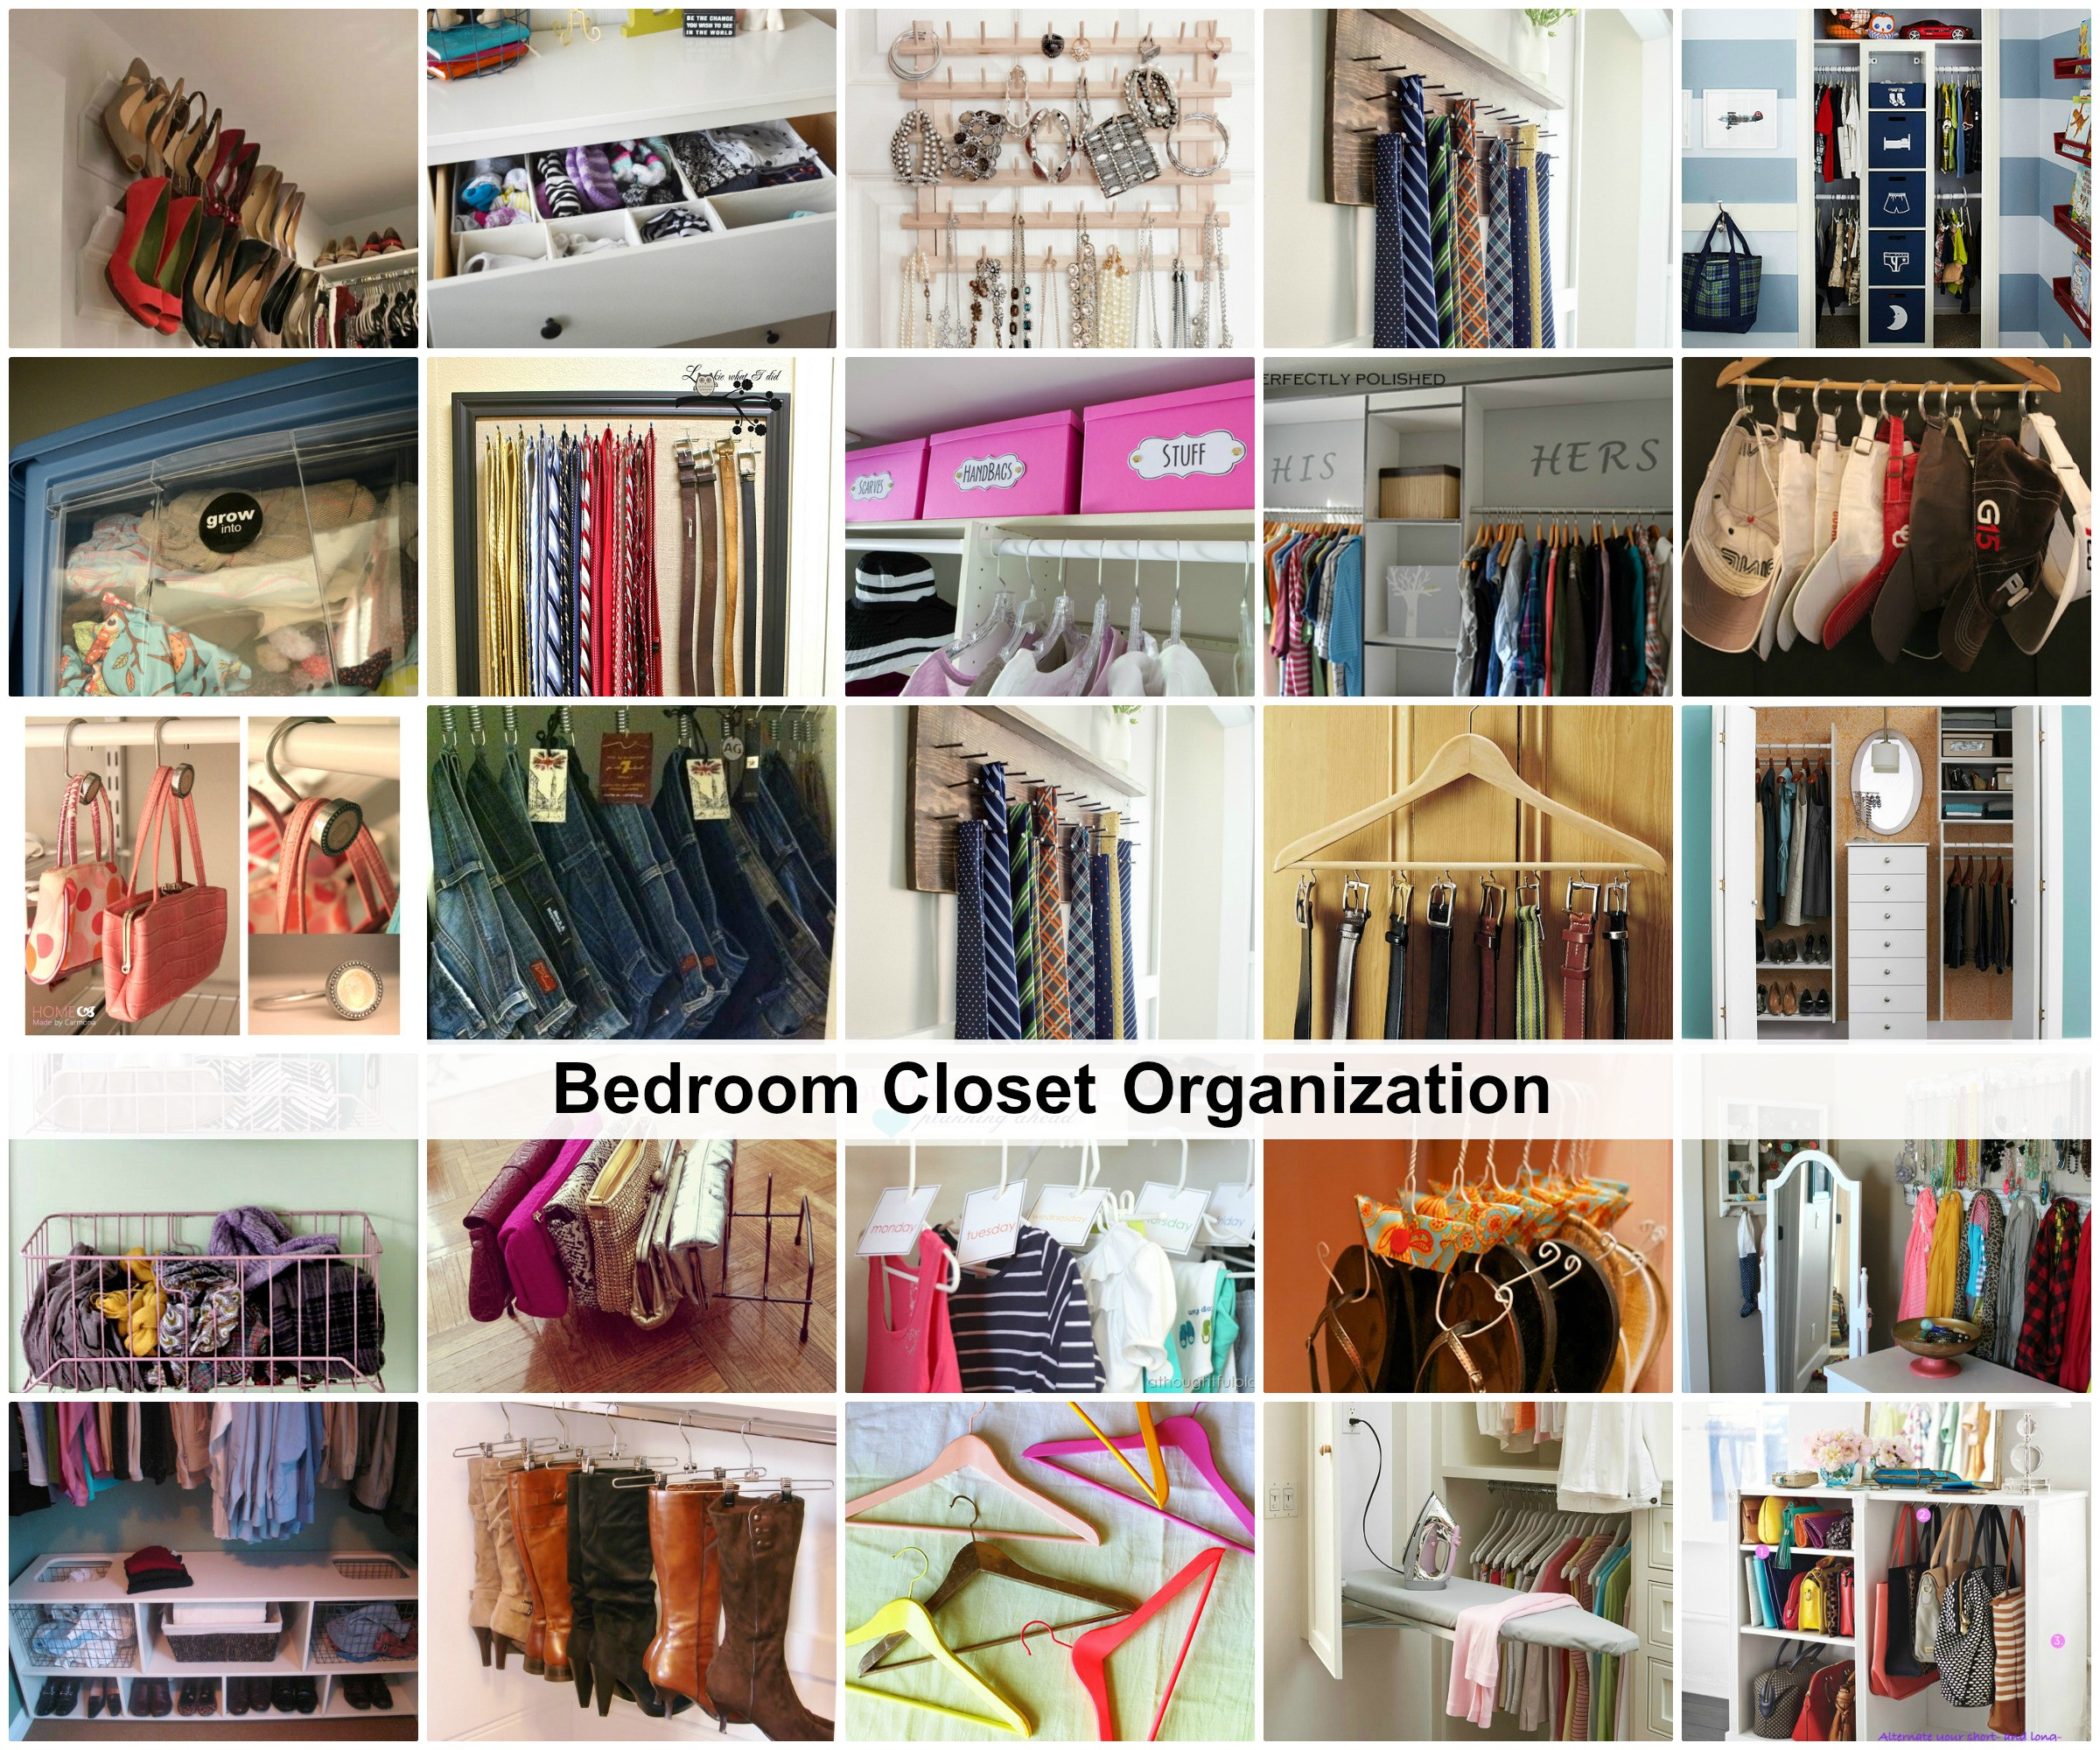 Best ideas about DIY Bedroom Organization Ideas
. Save or Pin Bedroom Closet Organization Ideas The Idea Room Now.